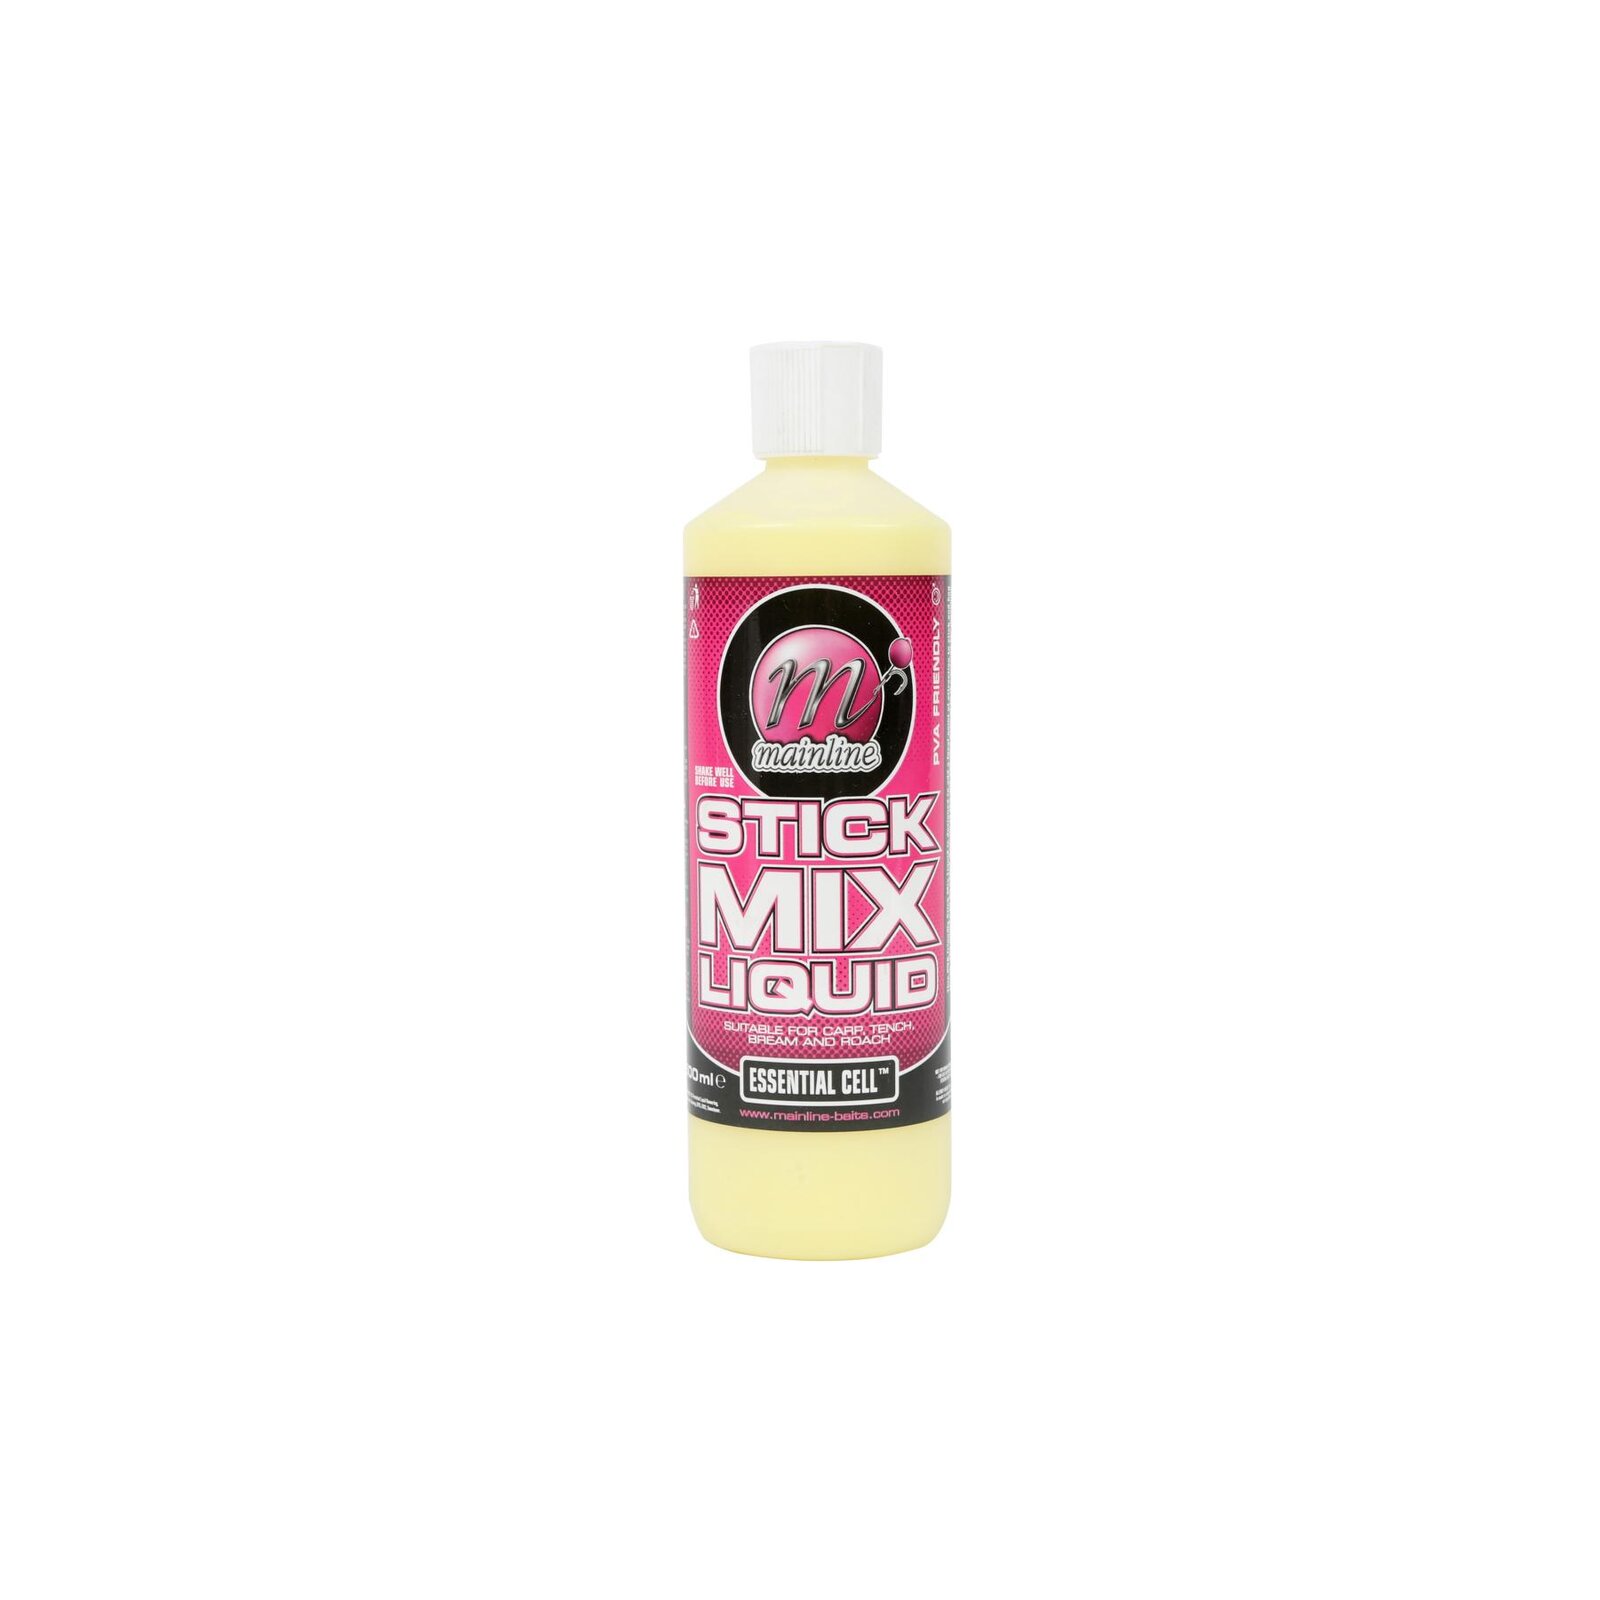 Mainline Stick Mix Liquid | Essential Cell | 500 ml Bottle